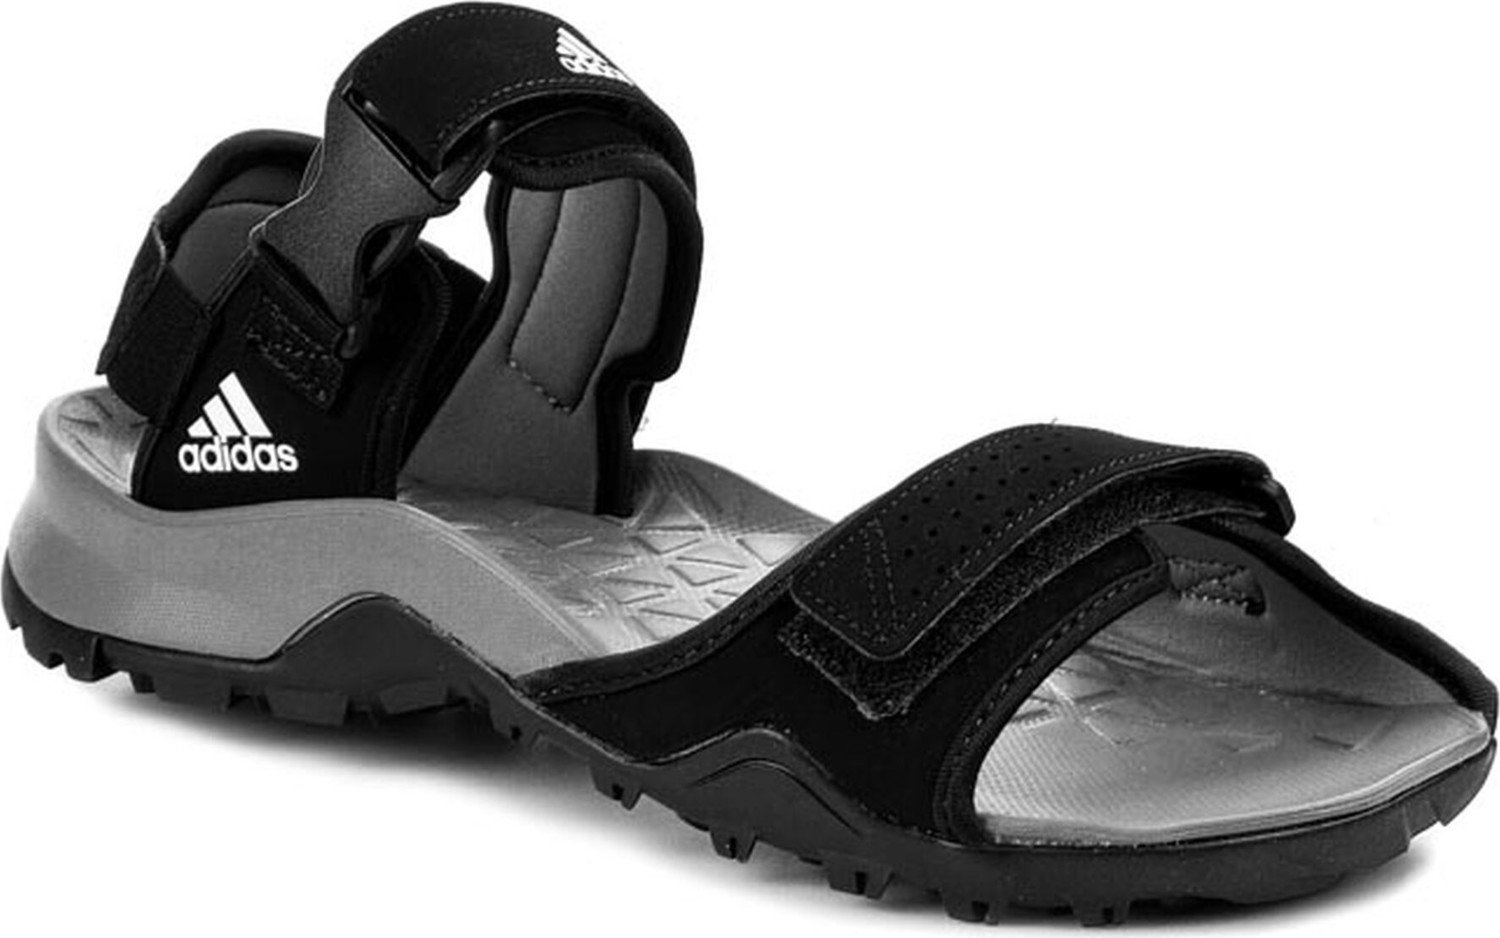 Sandály adidas Cyprex Ultra Sandal II B44191 CBlack/Visgre/Ftwwht